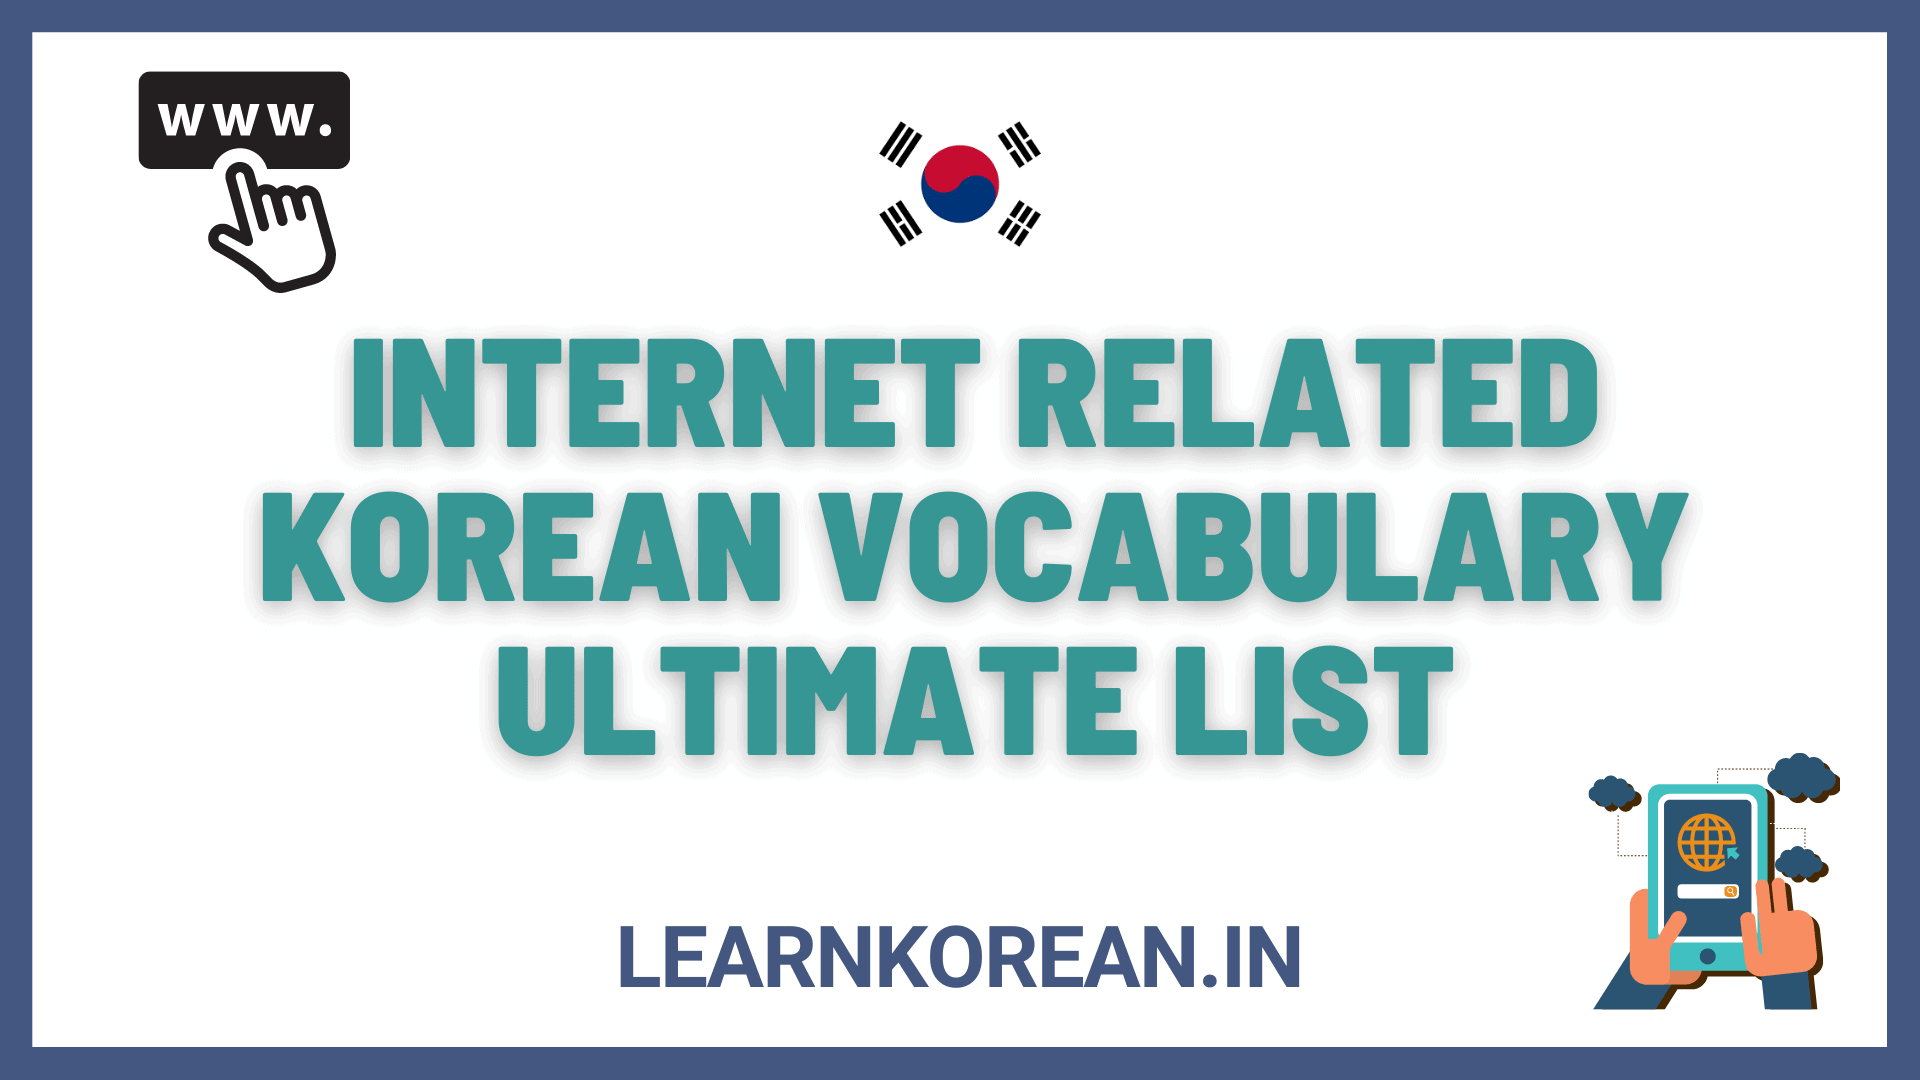 INTERNET RELATED KOREAN VOCABULARY LIST